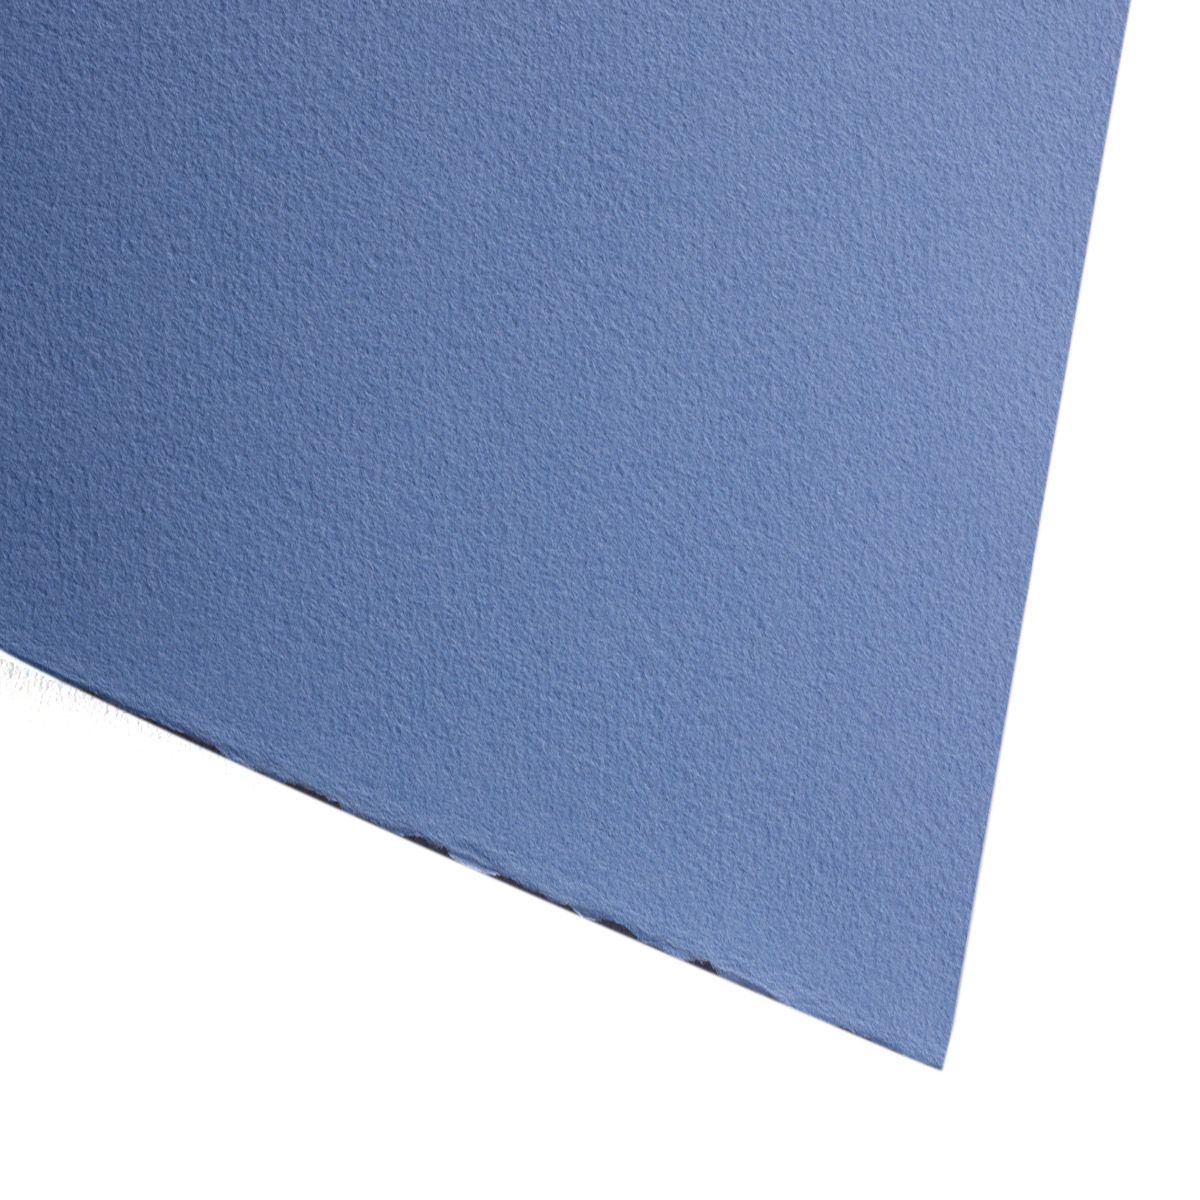 Fabriano Cromia Paper Sheet Light Blue 19.6